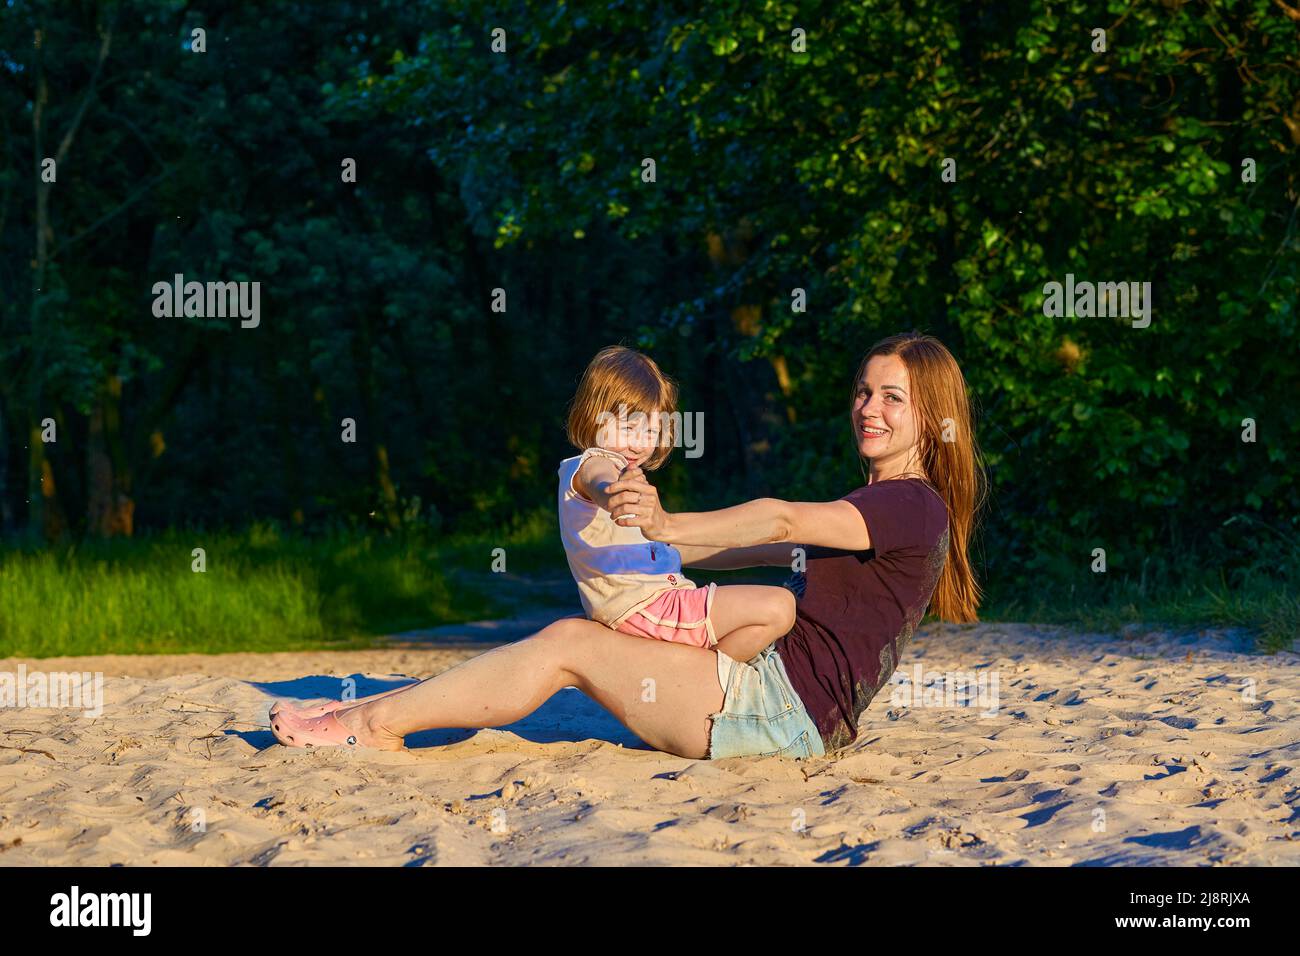 Wonderful cute baby girl child playing with happy mom among greenery sand dunes Stock Photo